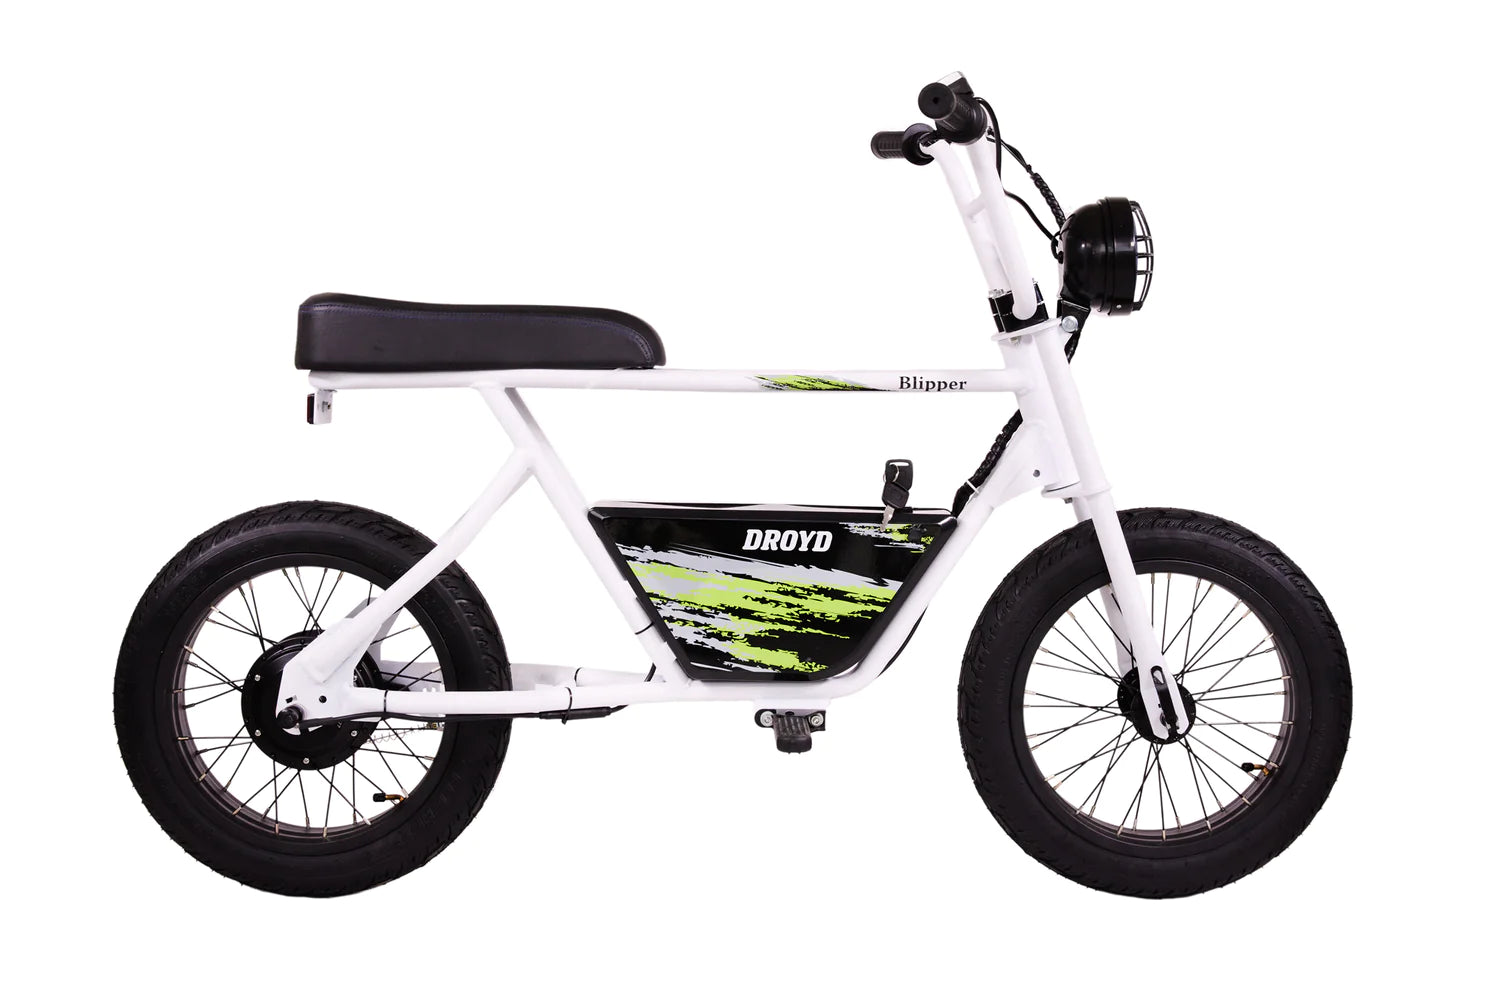 Droyd Blipper Pre-Teen Electric Motor Bike